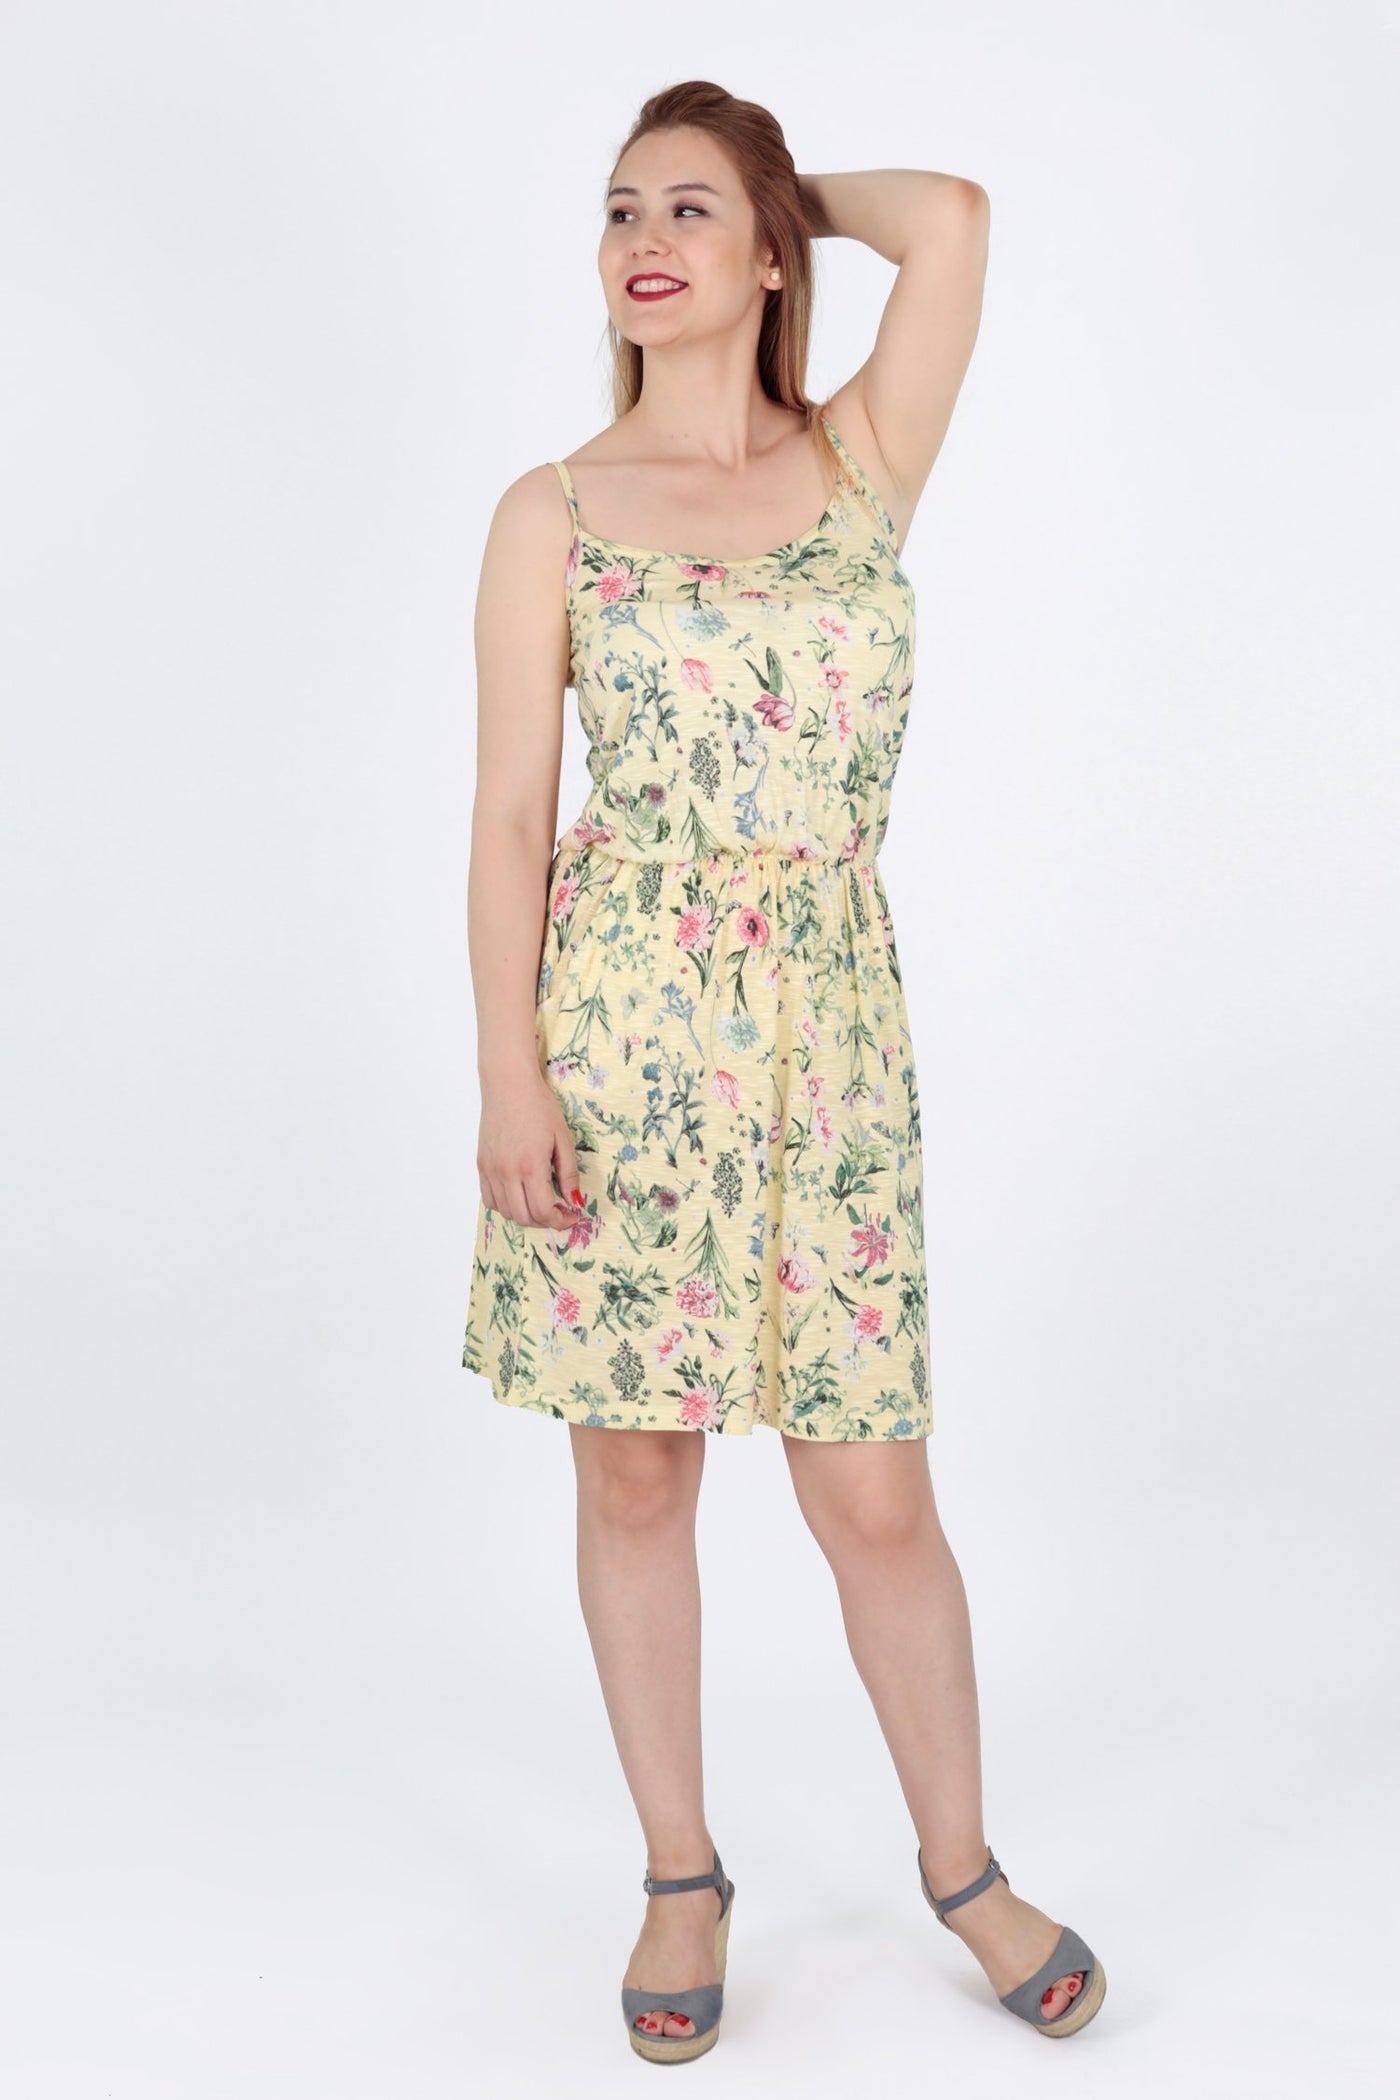 chassca printed midi floral sun dress - Breakmood